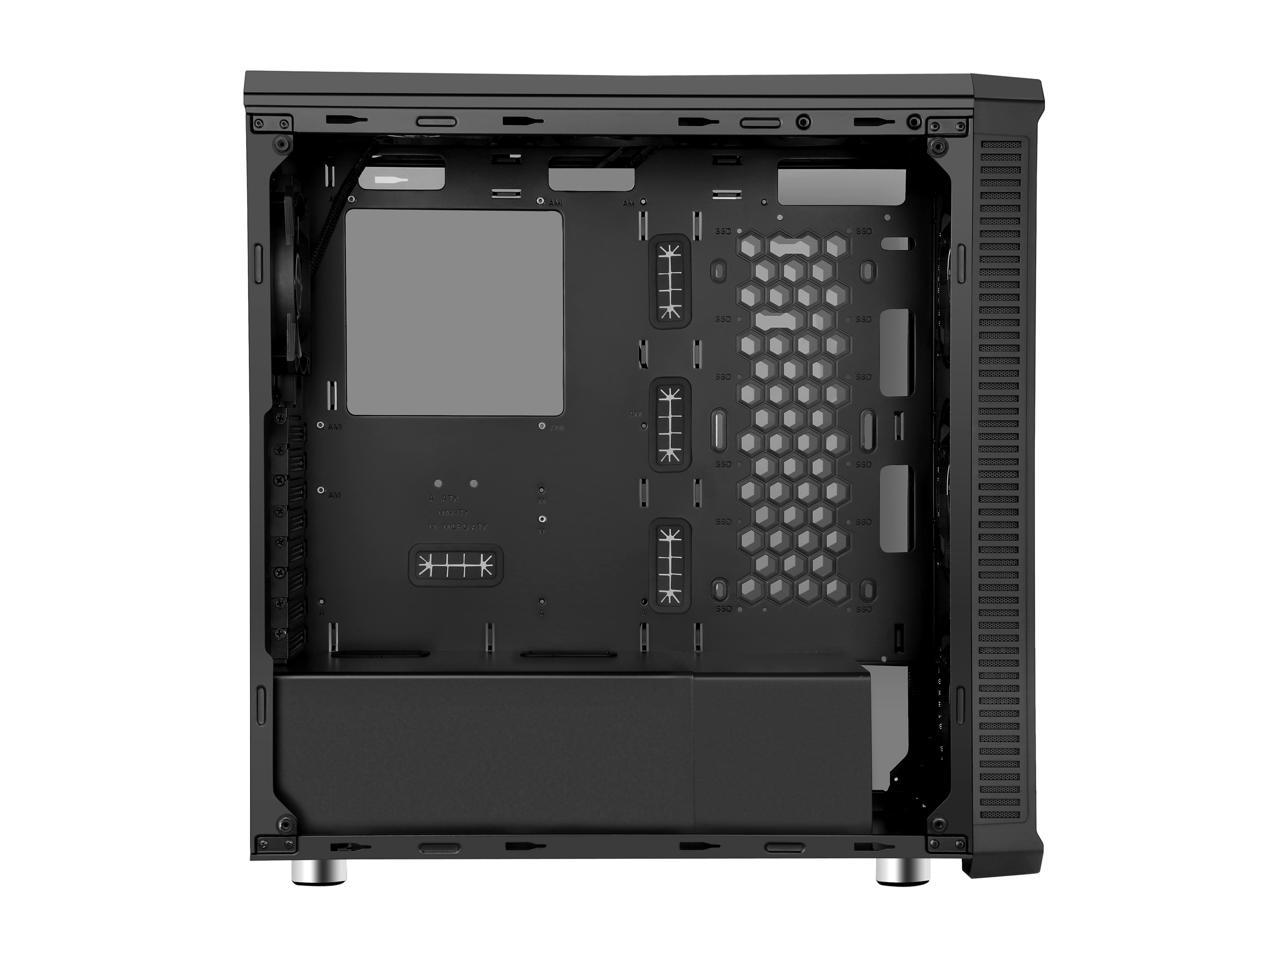 Diypc Vanguard-Rgb Black Dual Usb3.0 Steel/ Tempered Glass Atx Mid Tower Gaming Computer Case